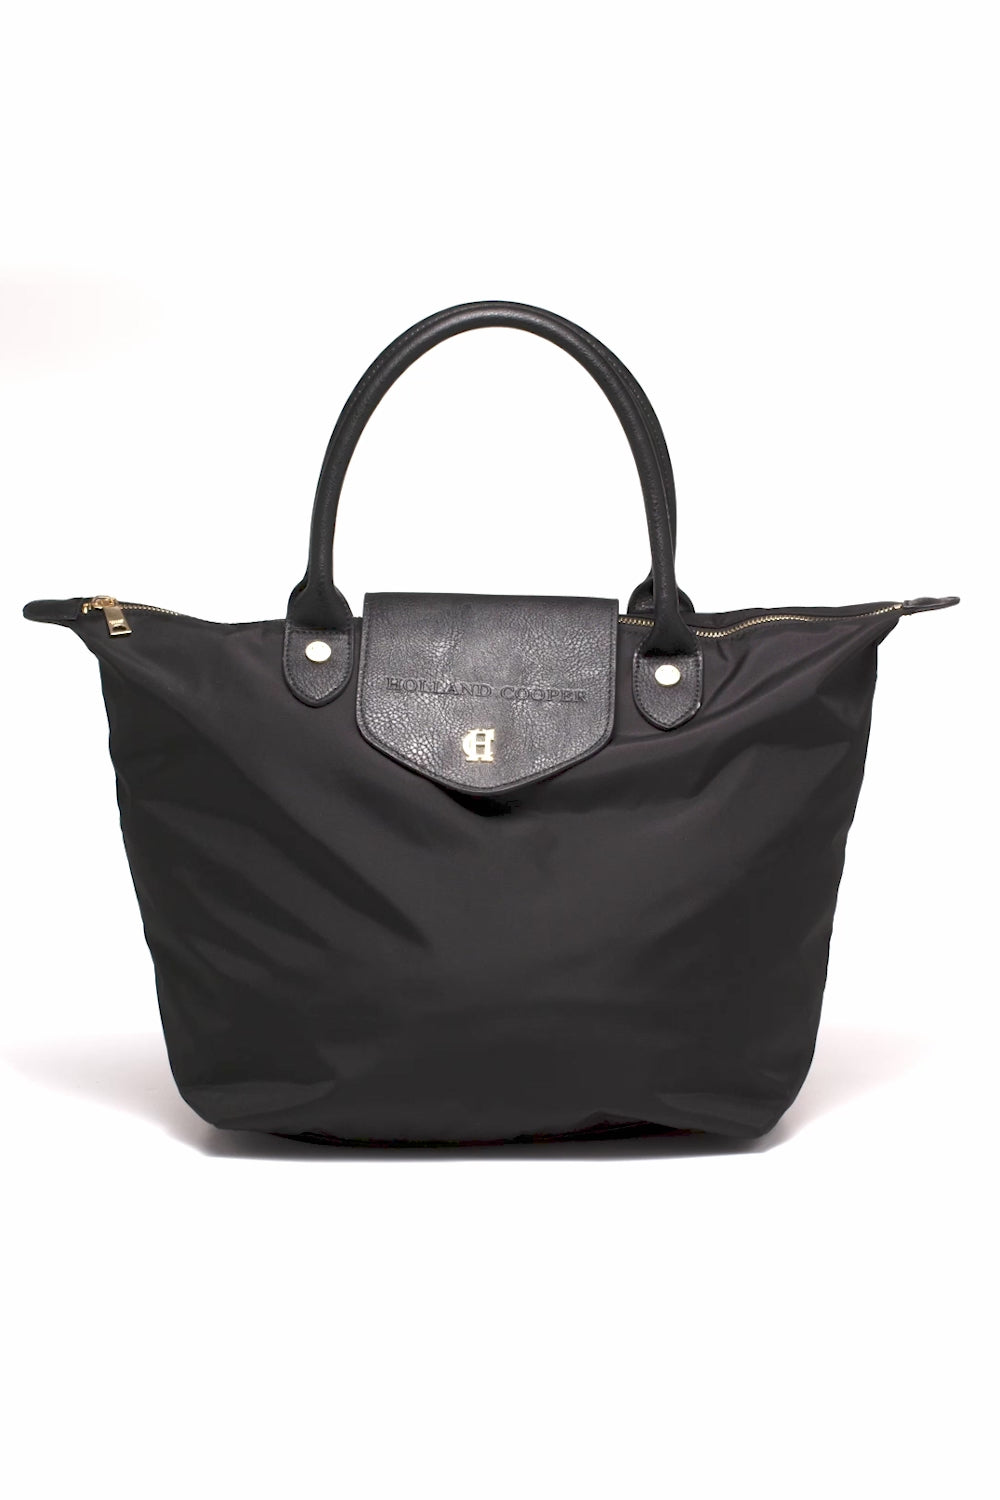 Holland Cooper Regency Packable Tote Bag - Black